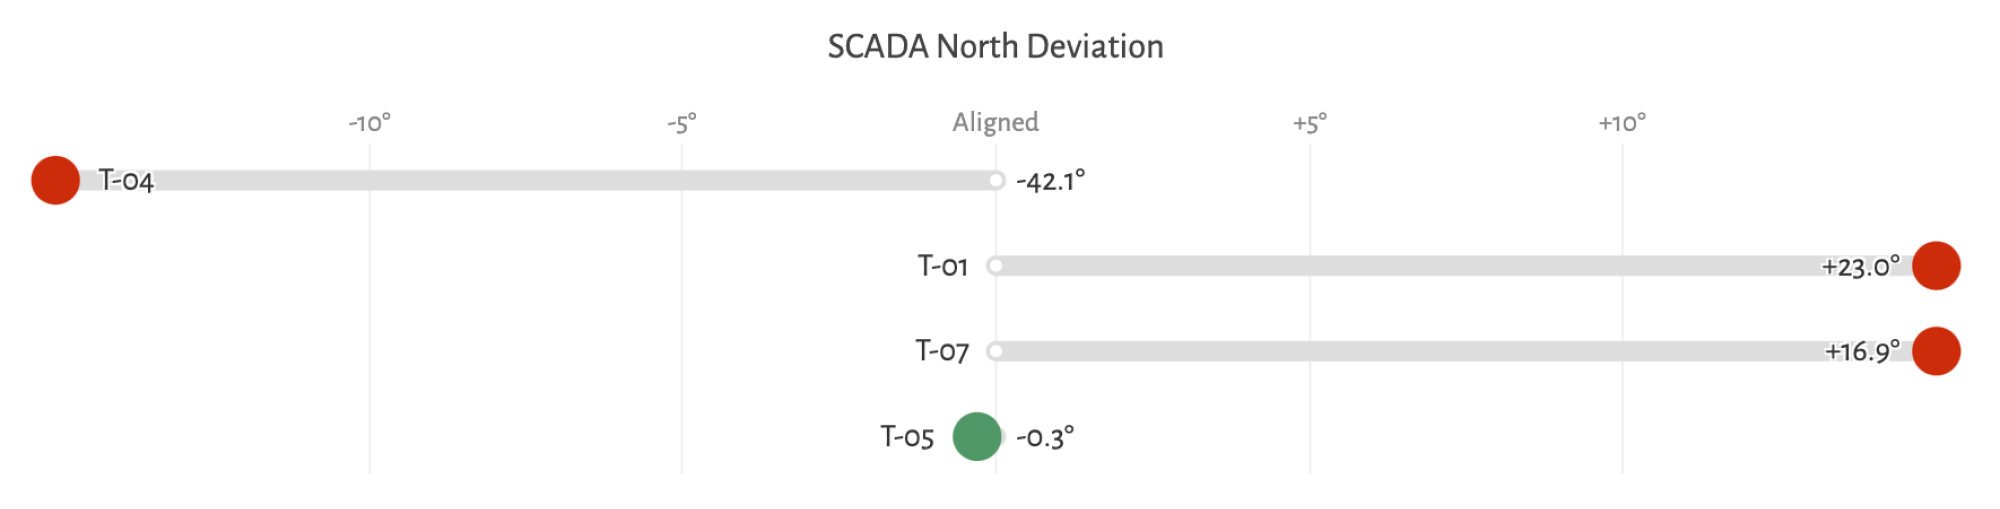 SCADA North Deviation Alignment